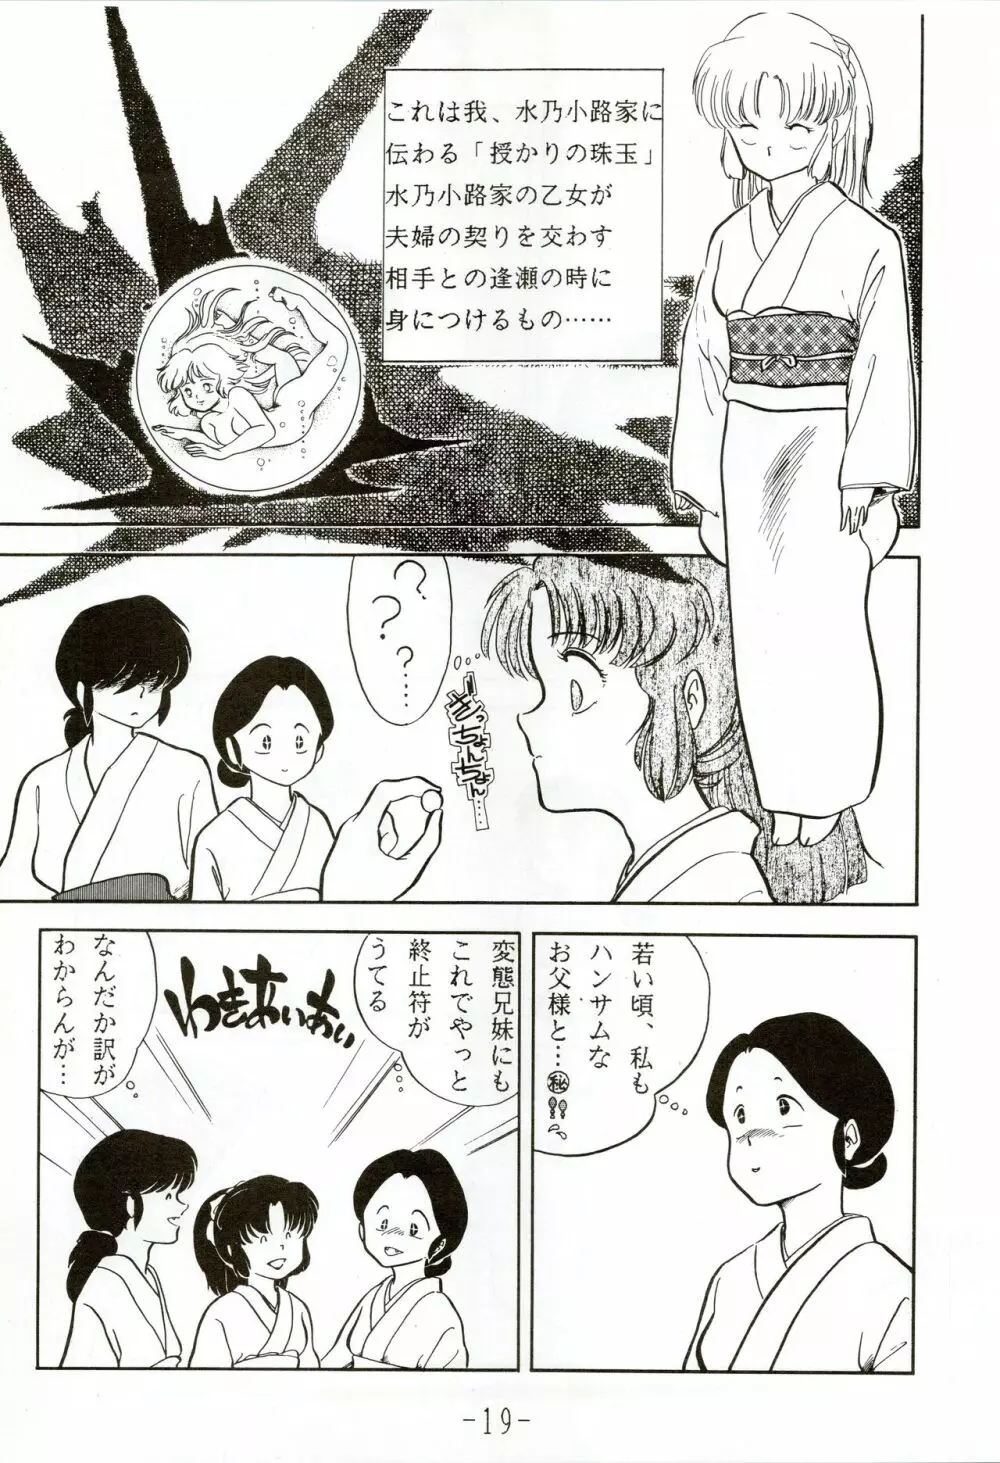 甲冑伝説 - page19